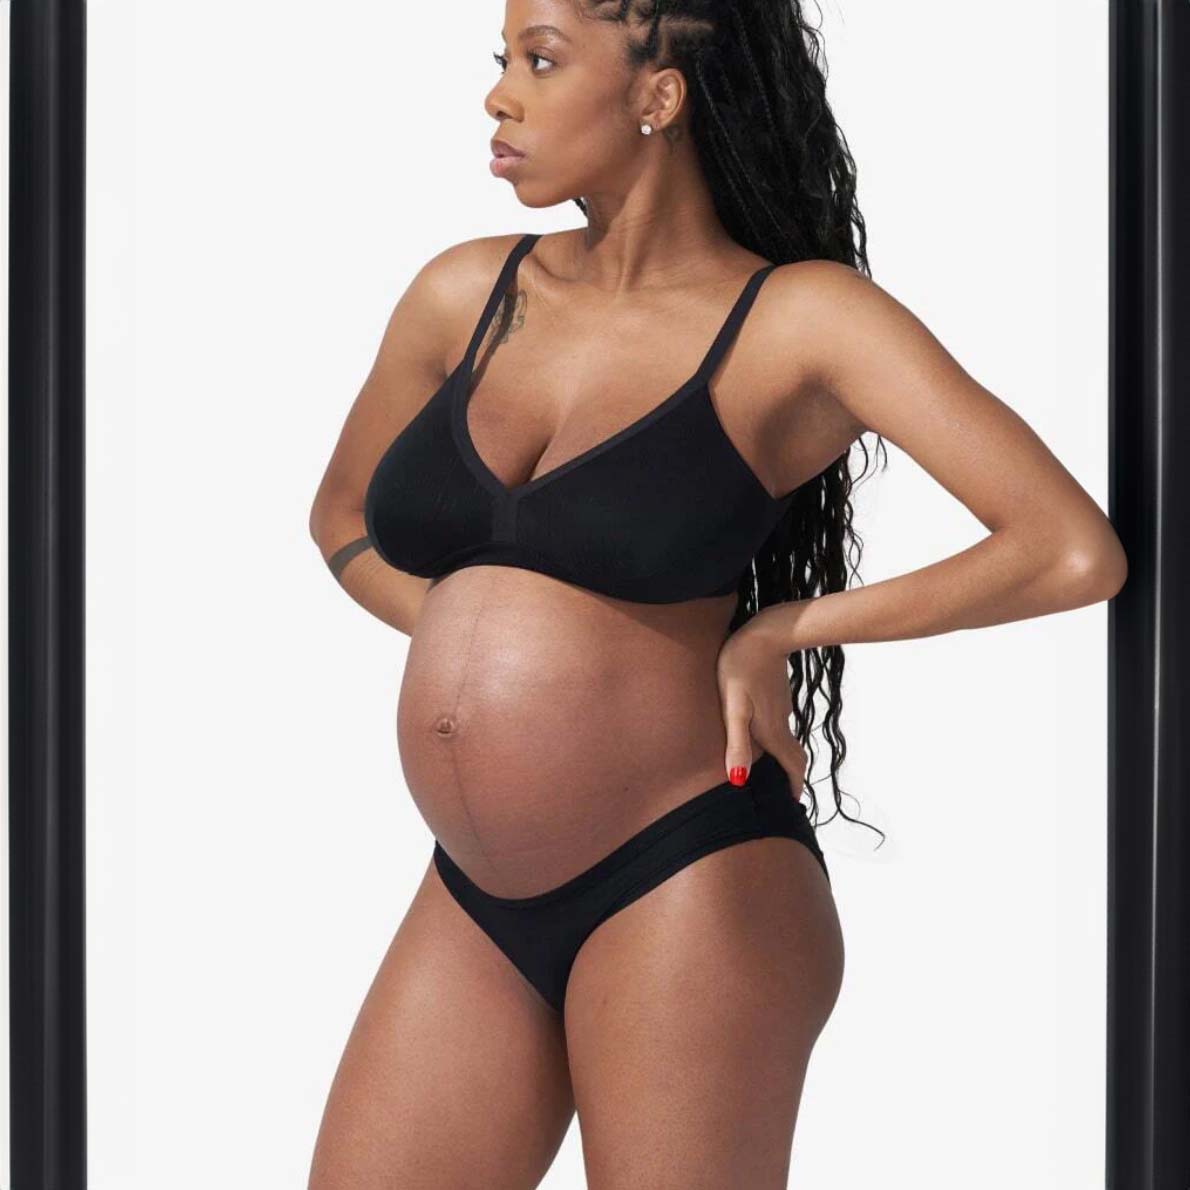 Pregnant woman wearing black bra and underwear